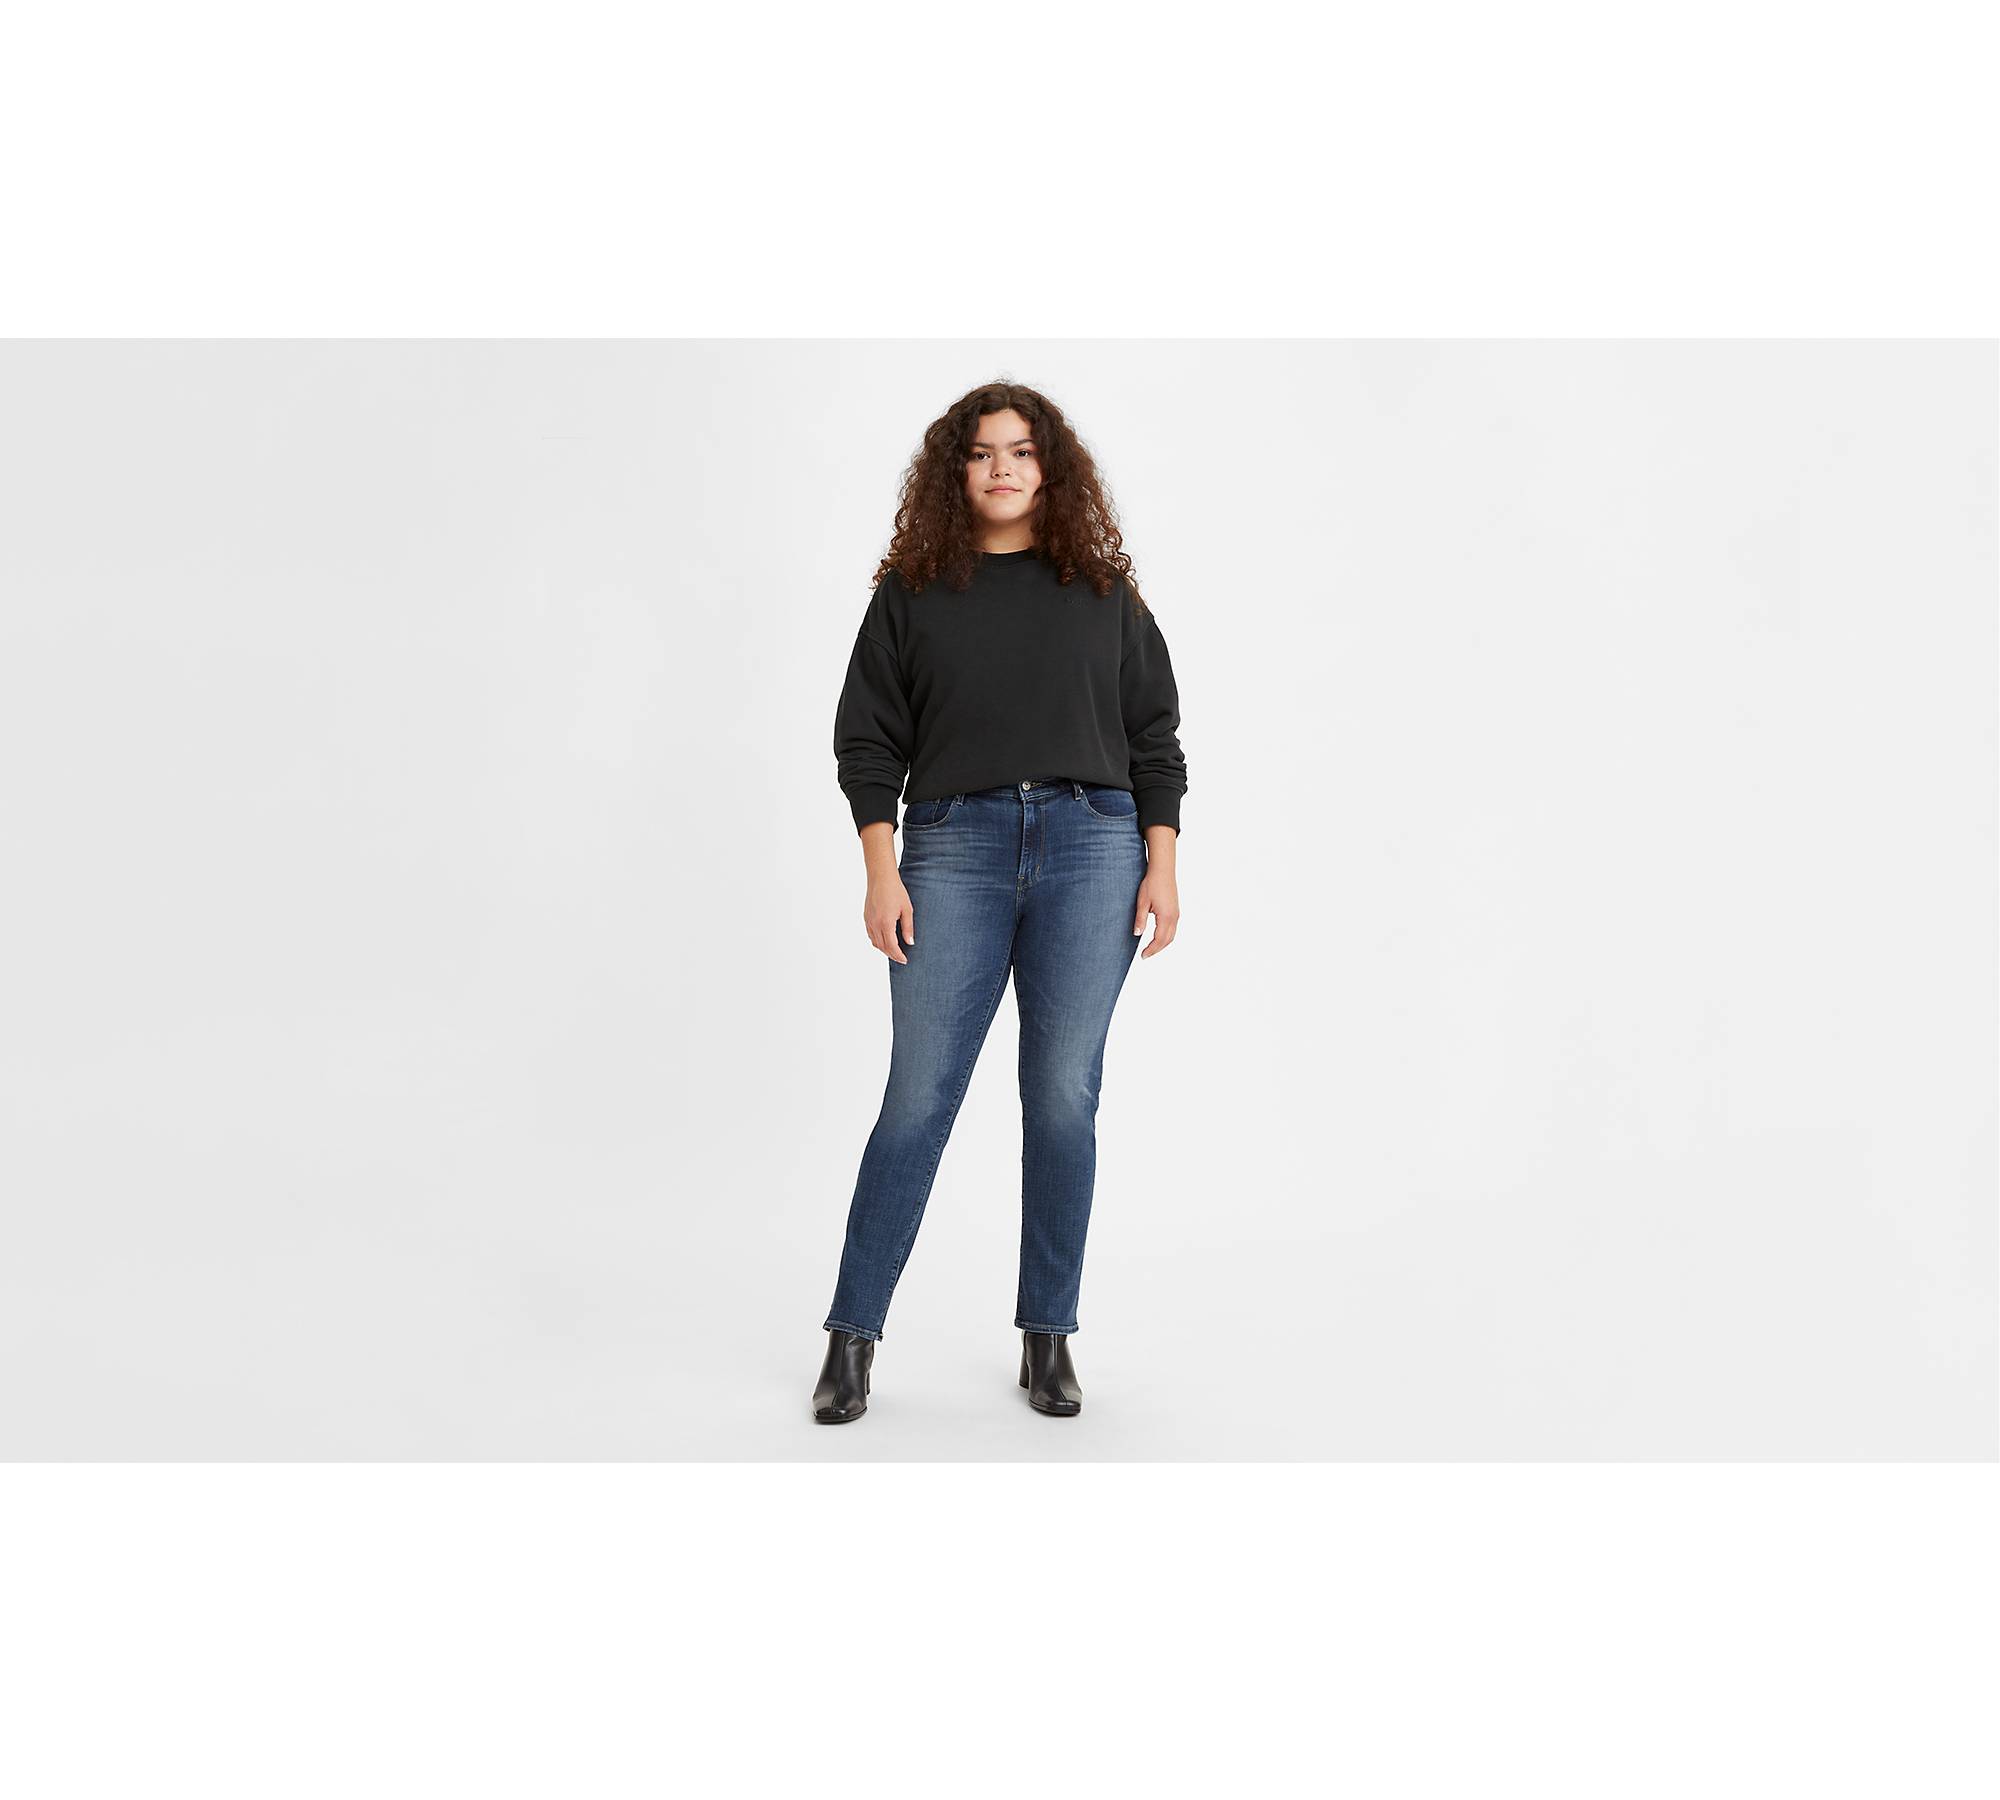 Womens Levi Classic Straight-Leg Regular-Fit Soft Black Jean